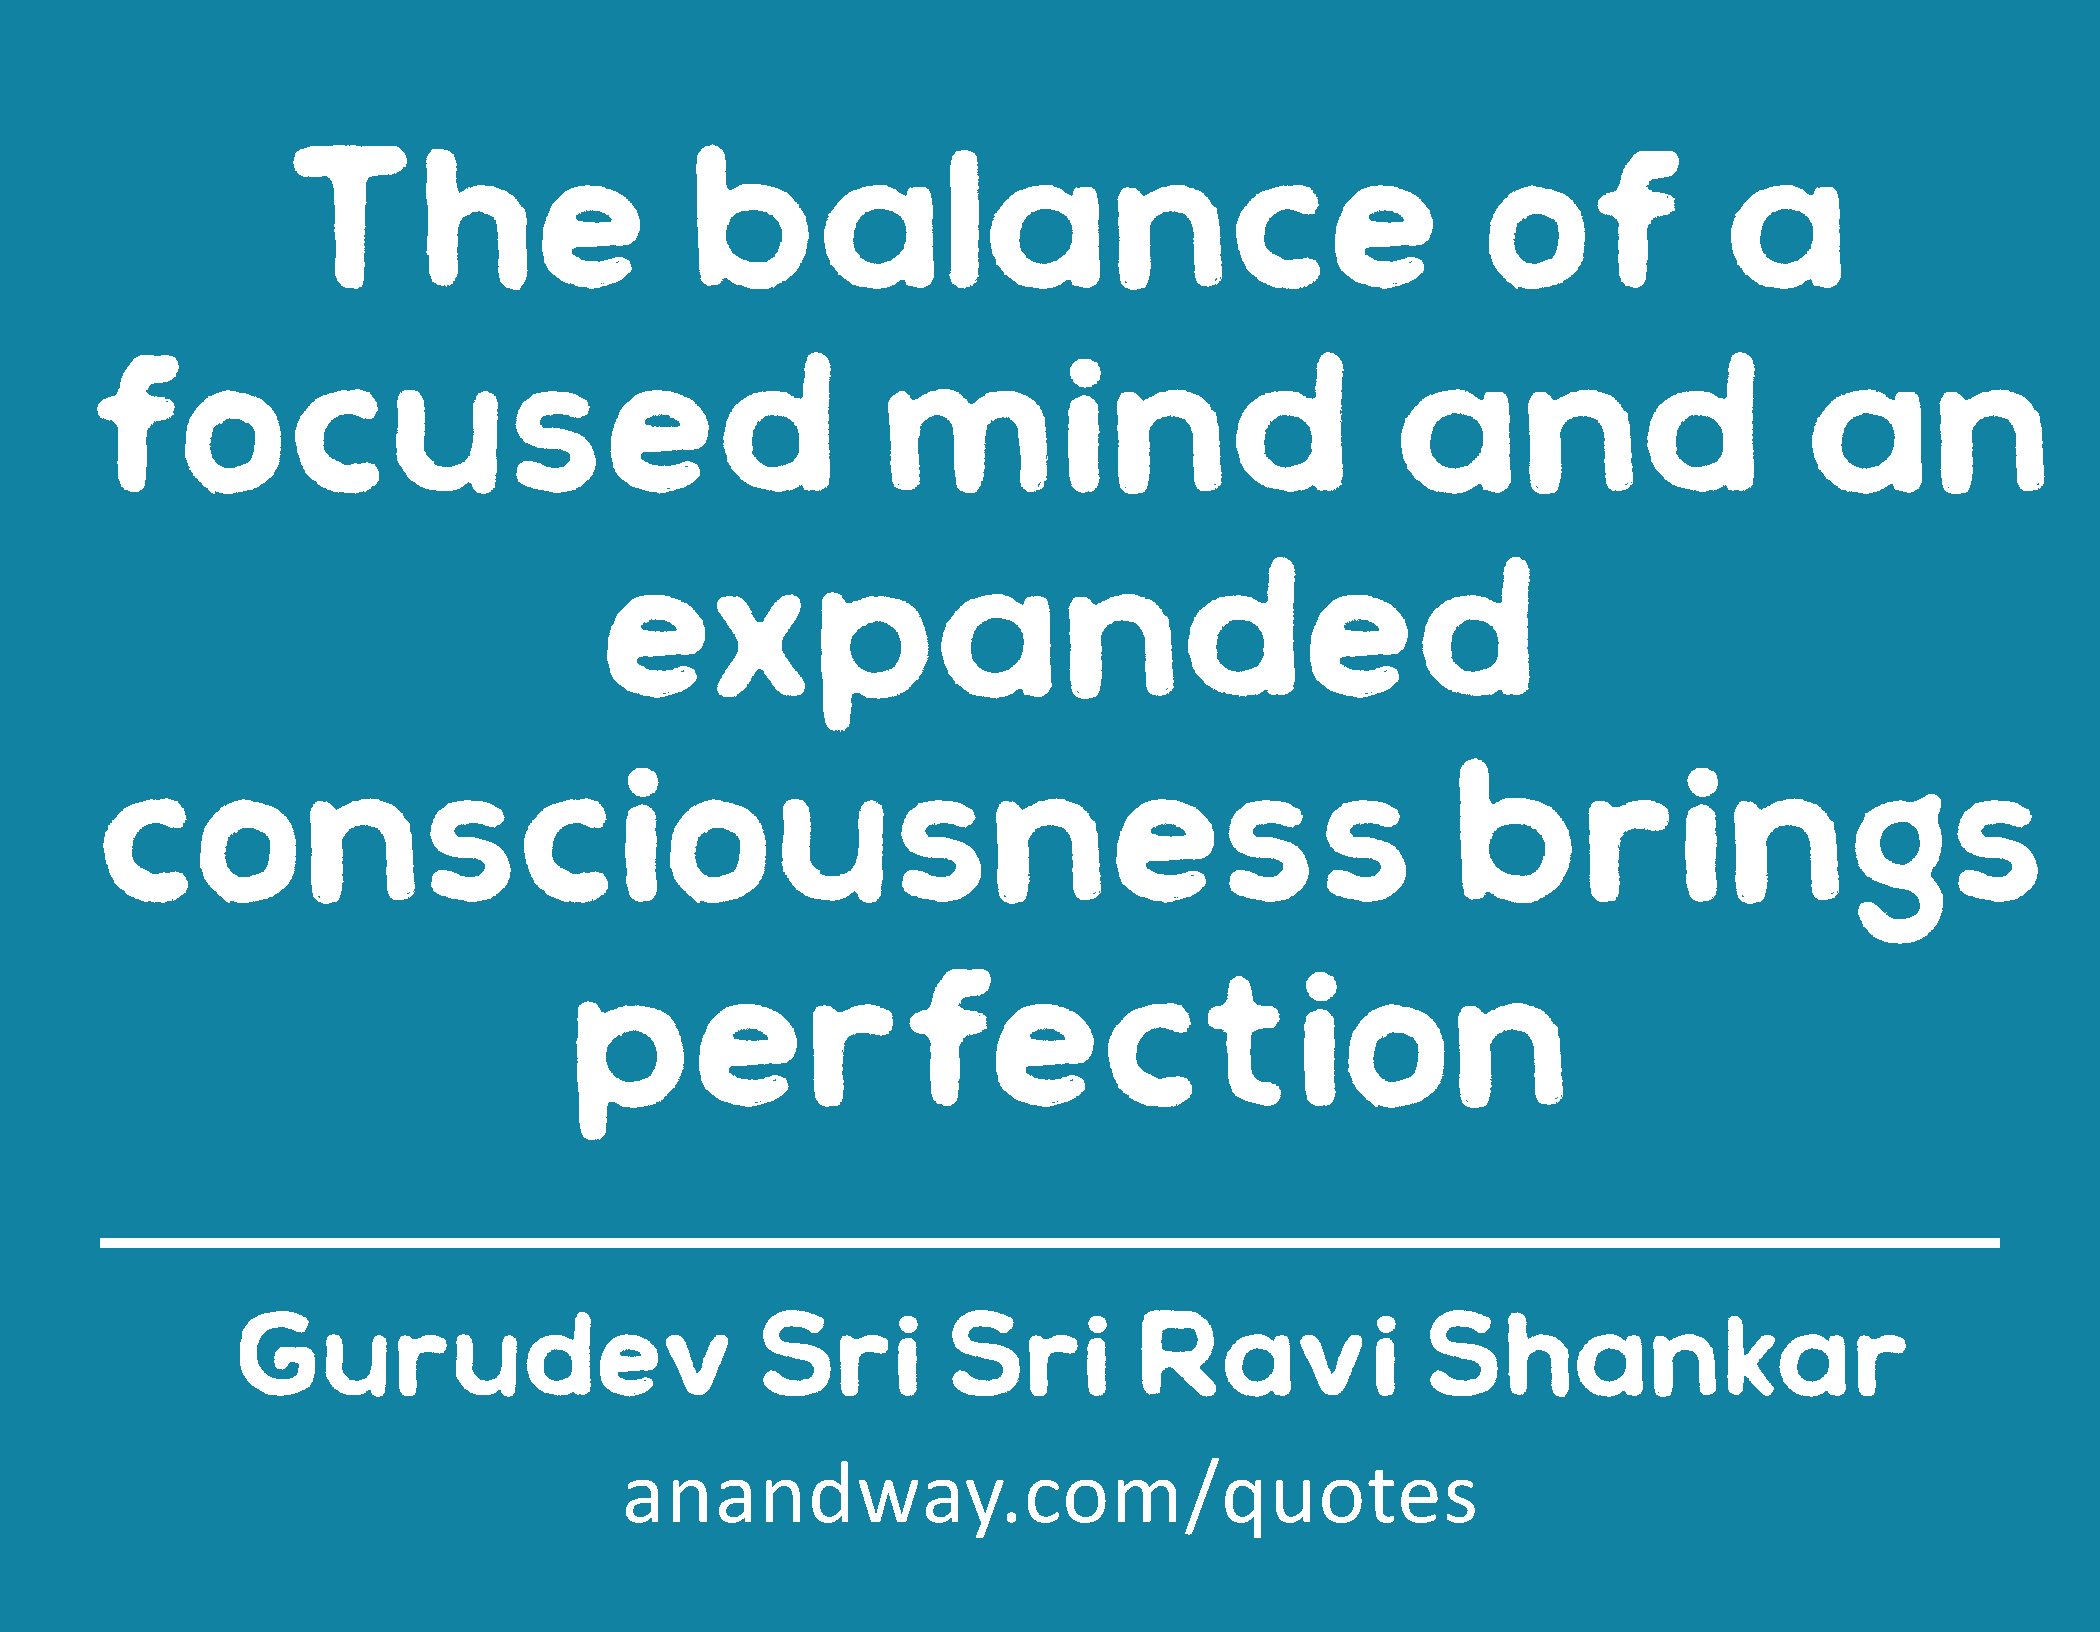 The balance of a focused mind and an expanded consciousness brings perfection 
 -Gurudev Sri Sri Ravi Shankar